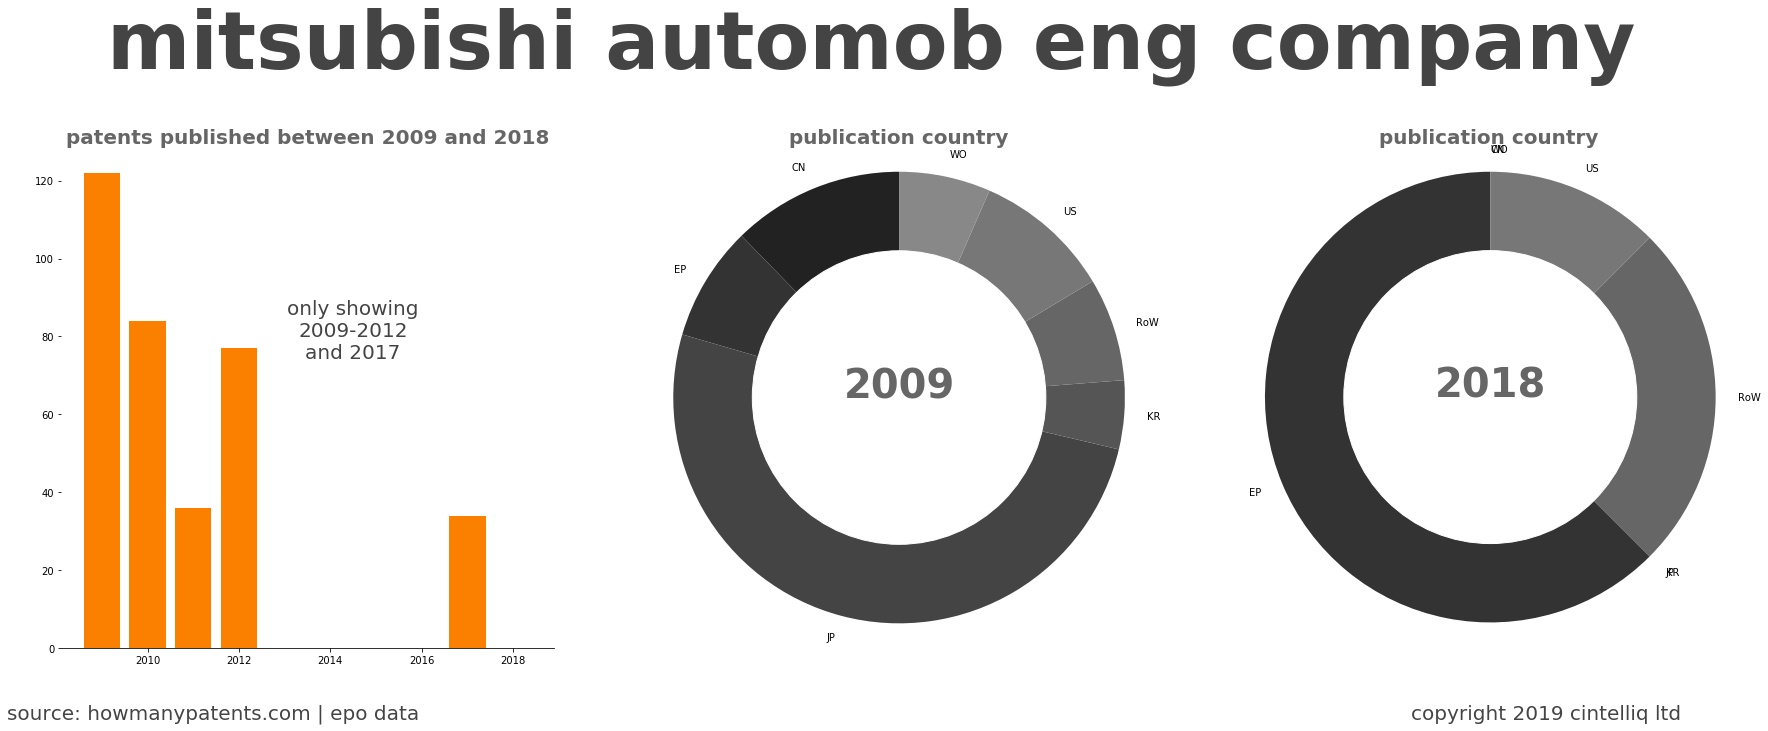 summary of patents for Mitsubishi Automob Eng Company